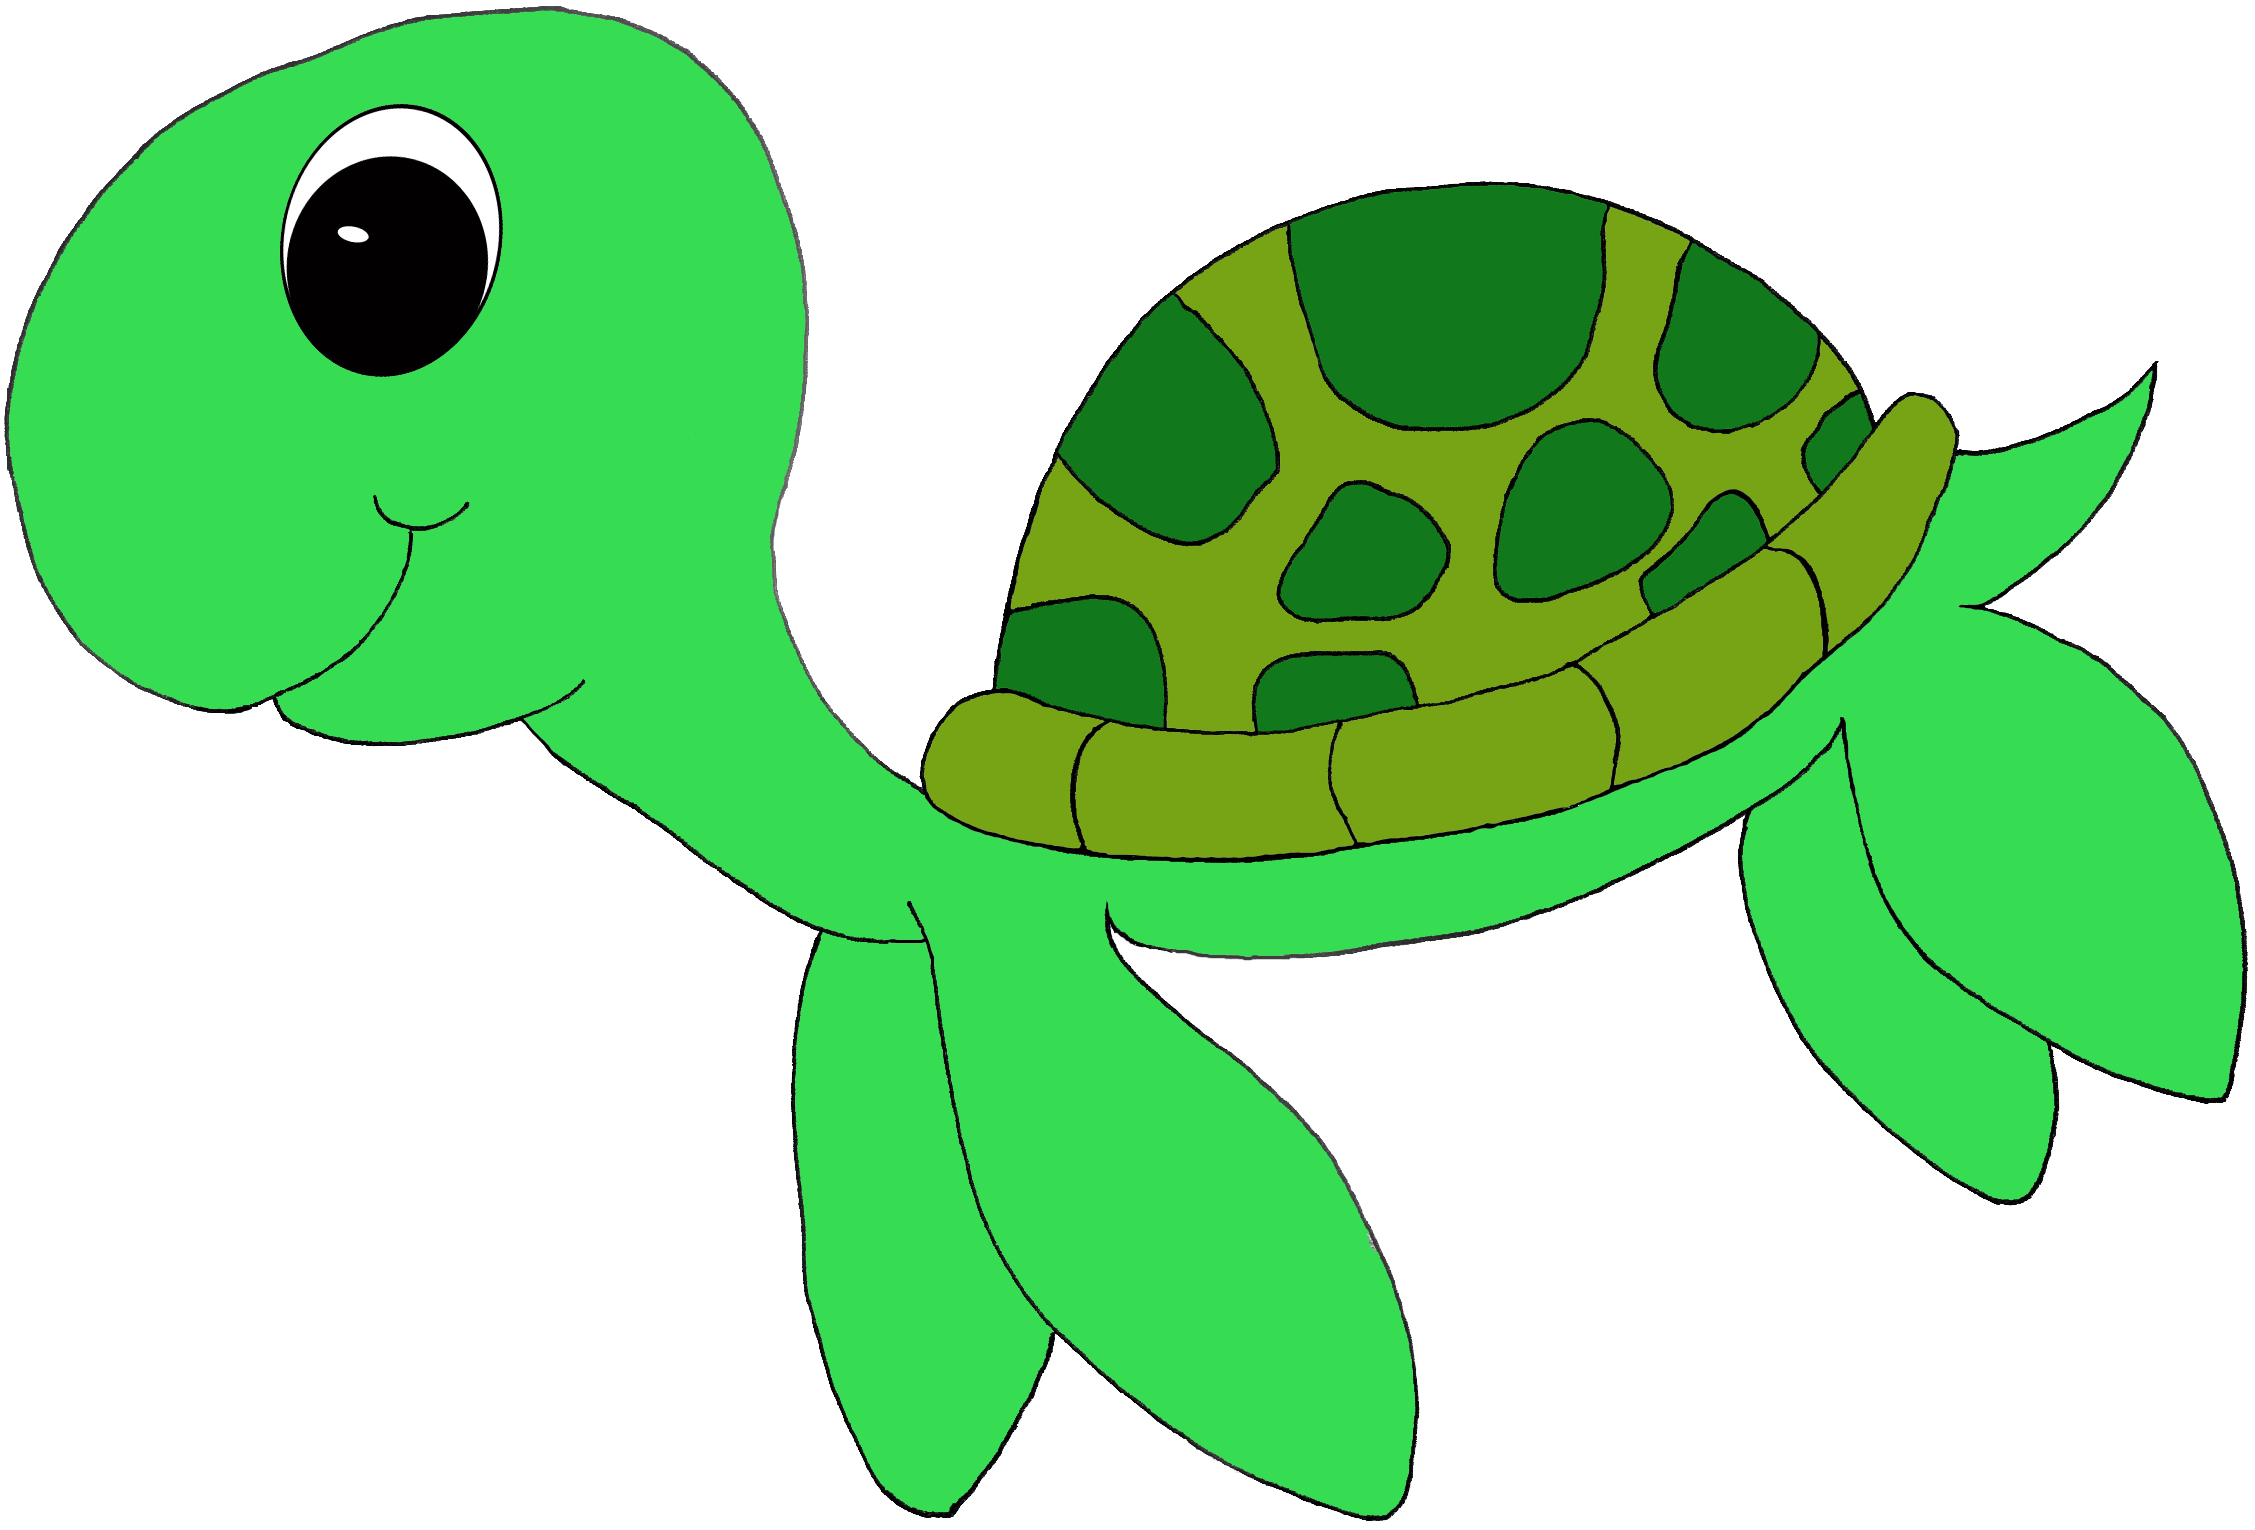 Turtle clip-art.